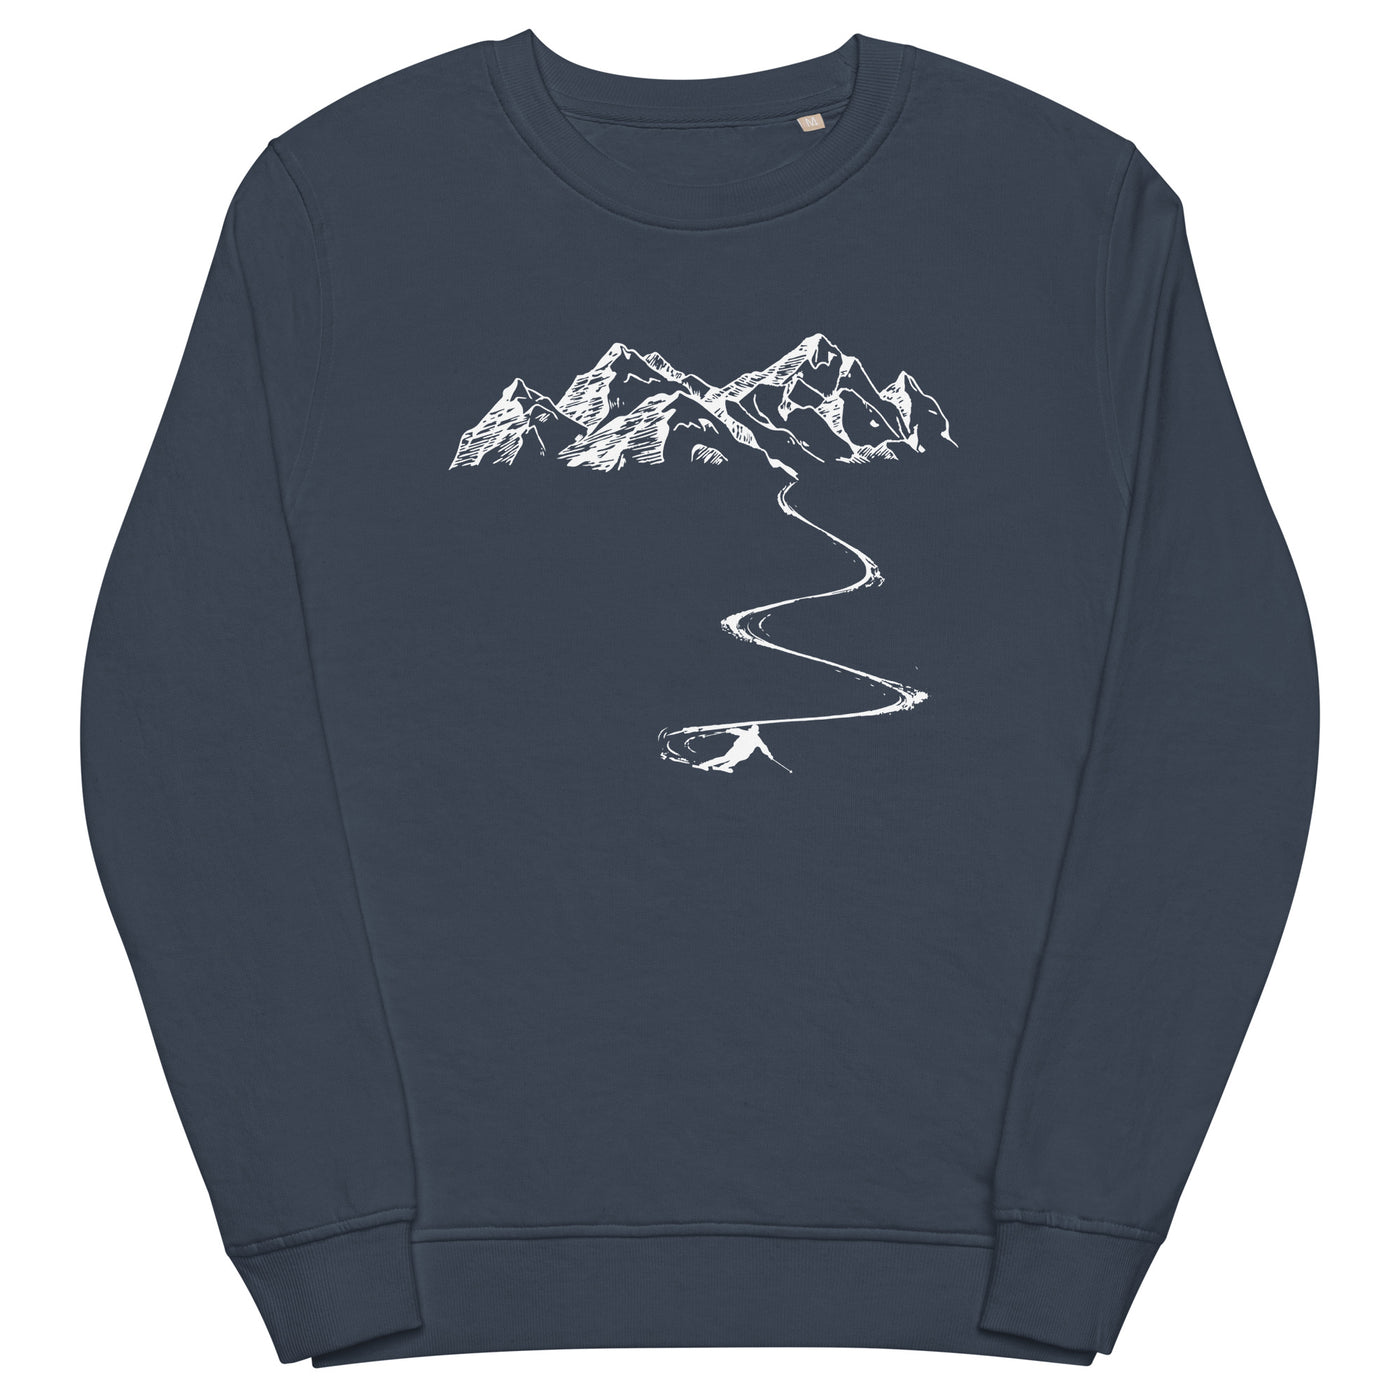 Berge - Kurve Linie - Skifahren - Unisex Premium Organic Sweatshirt klettern ski xxx yyy zzz French Navy